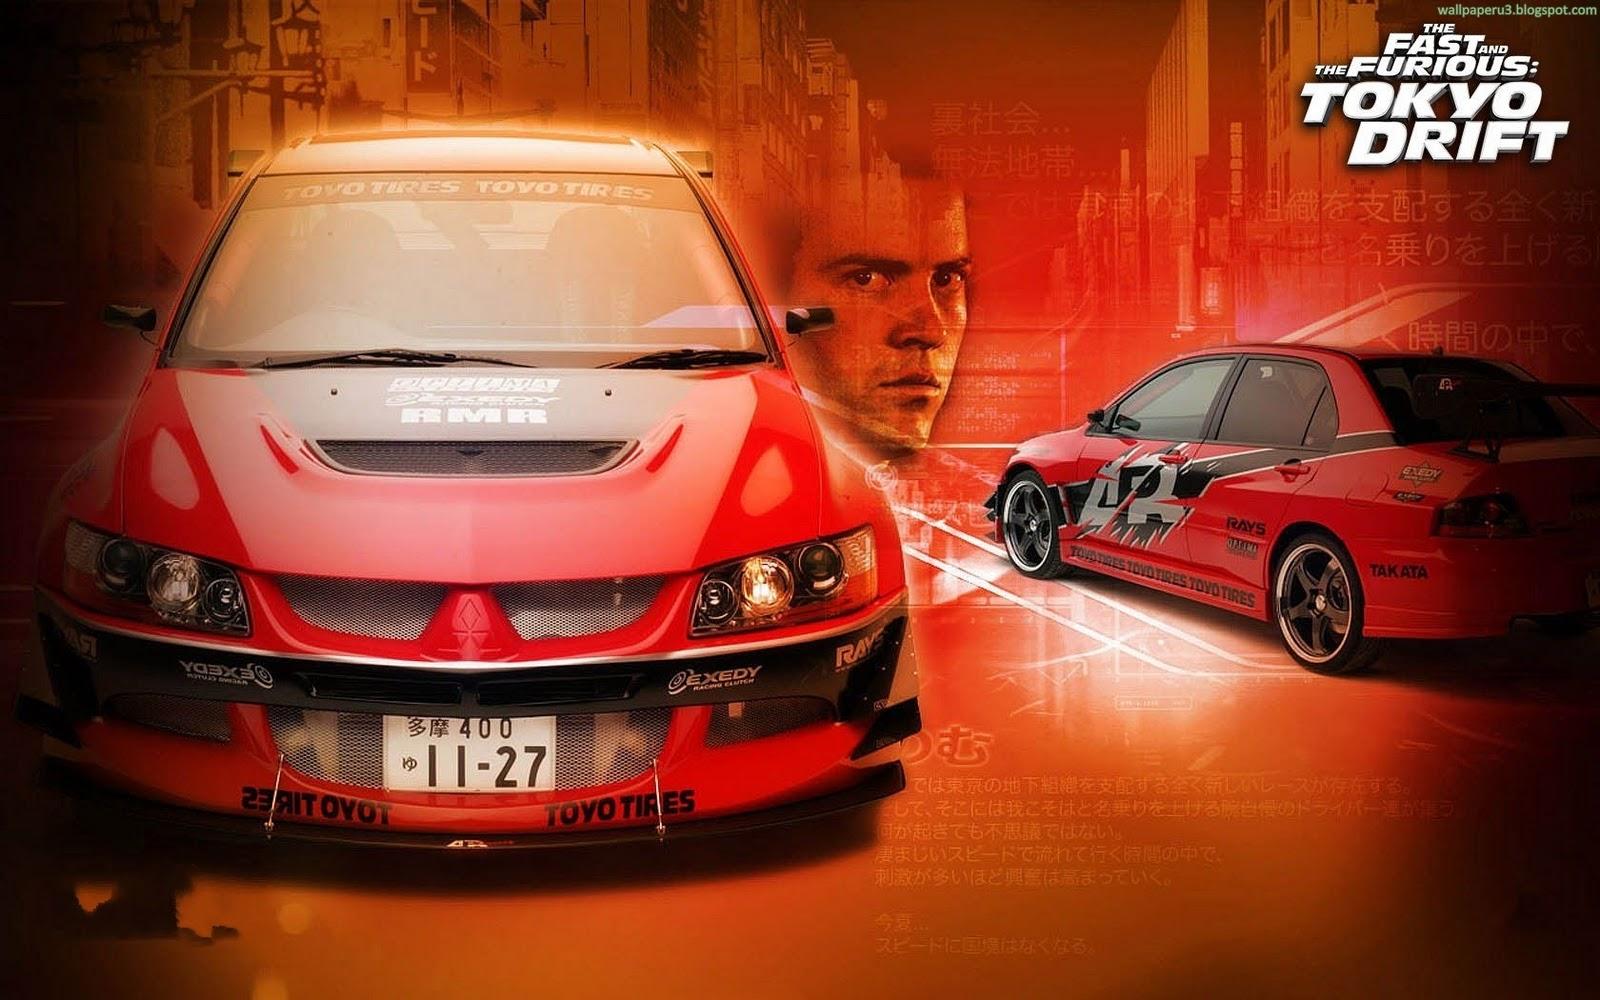 Download Wallpaperfree: Fast And Furious Tokyo Drift Wallpaper